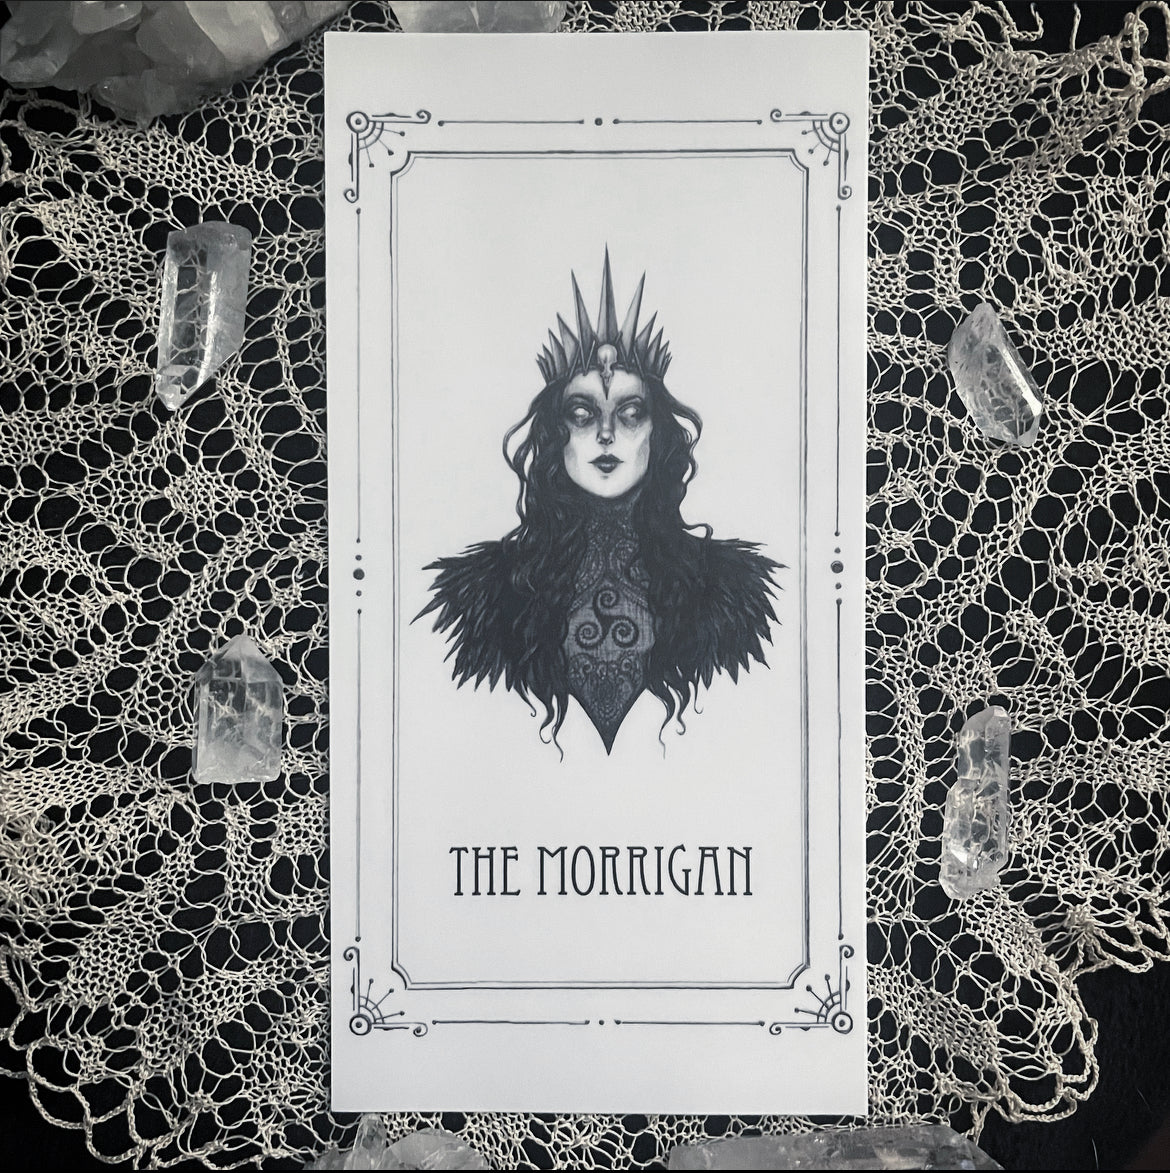 The Morrigan Devotional Candle Sticker - 3x6” High Quality Vinyl Sticker